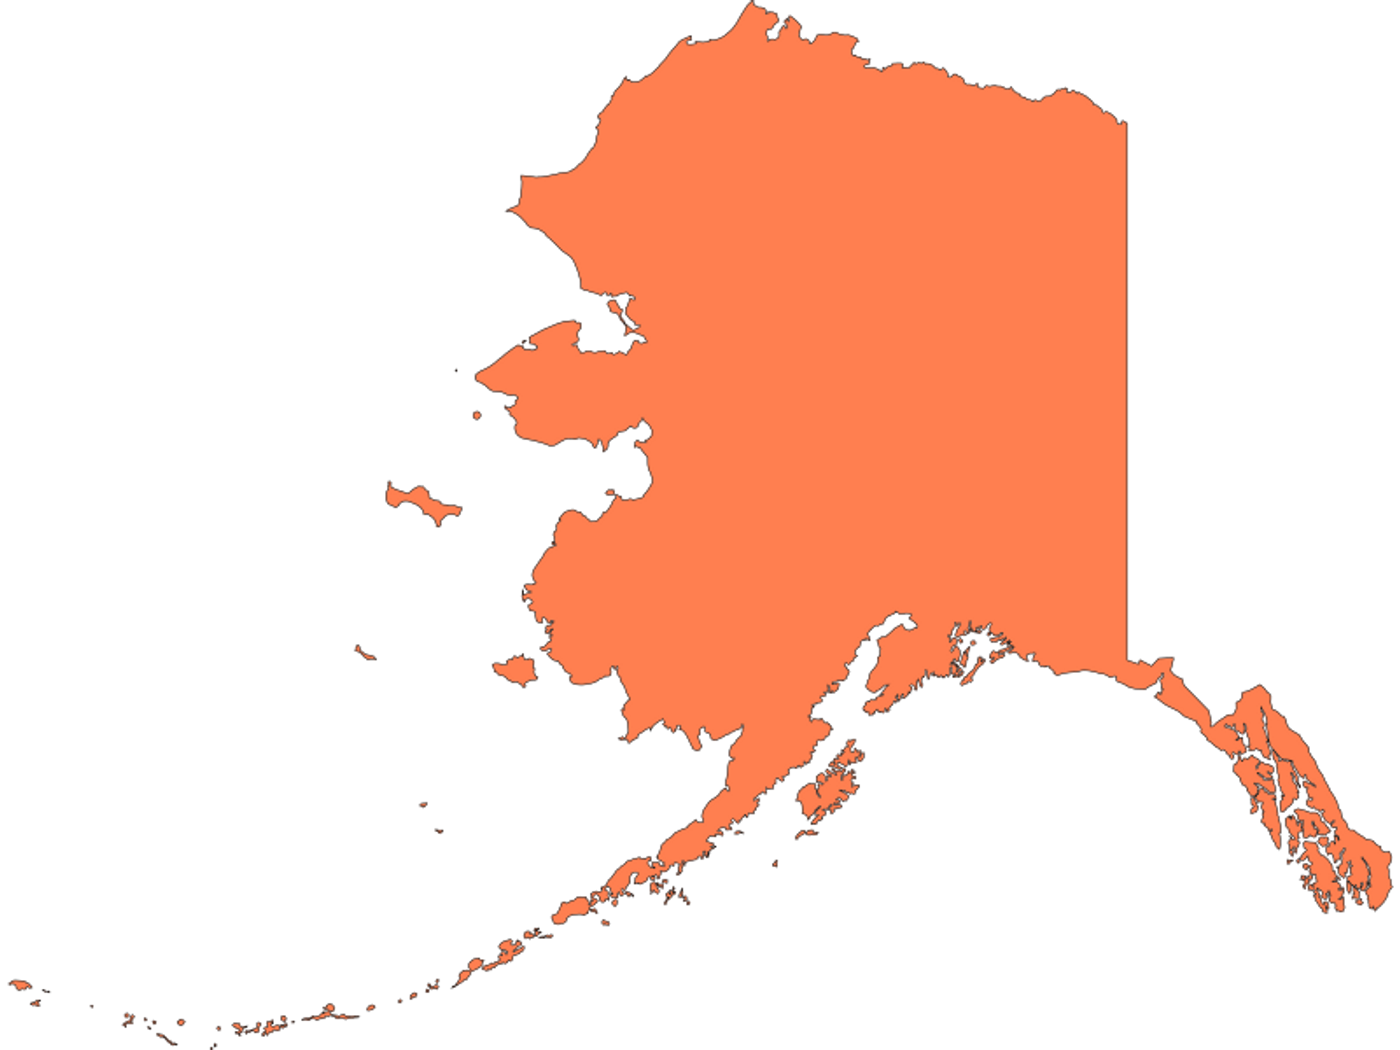 Alaska Outline